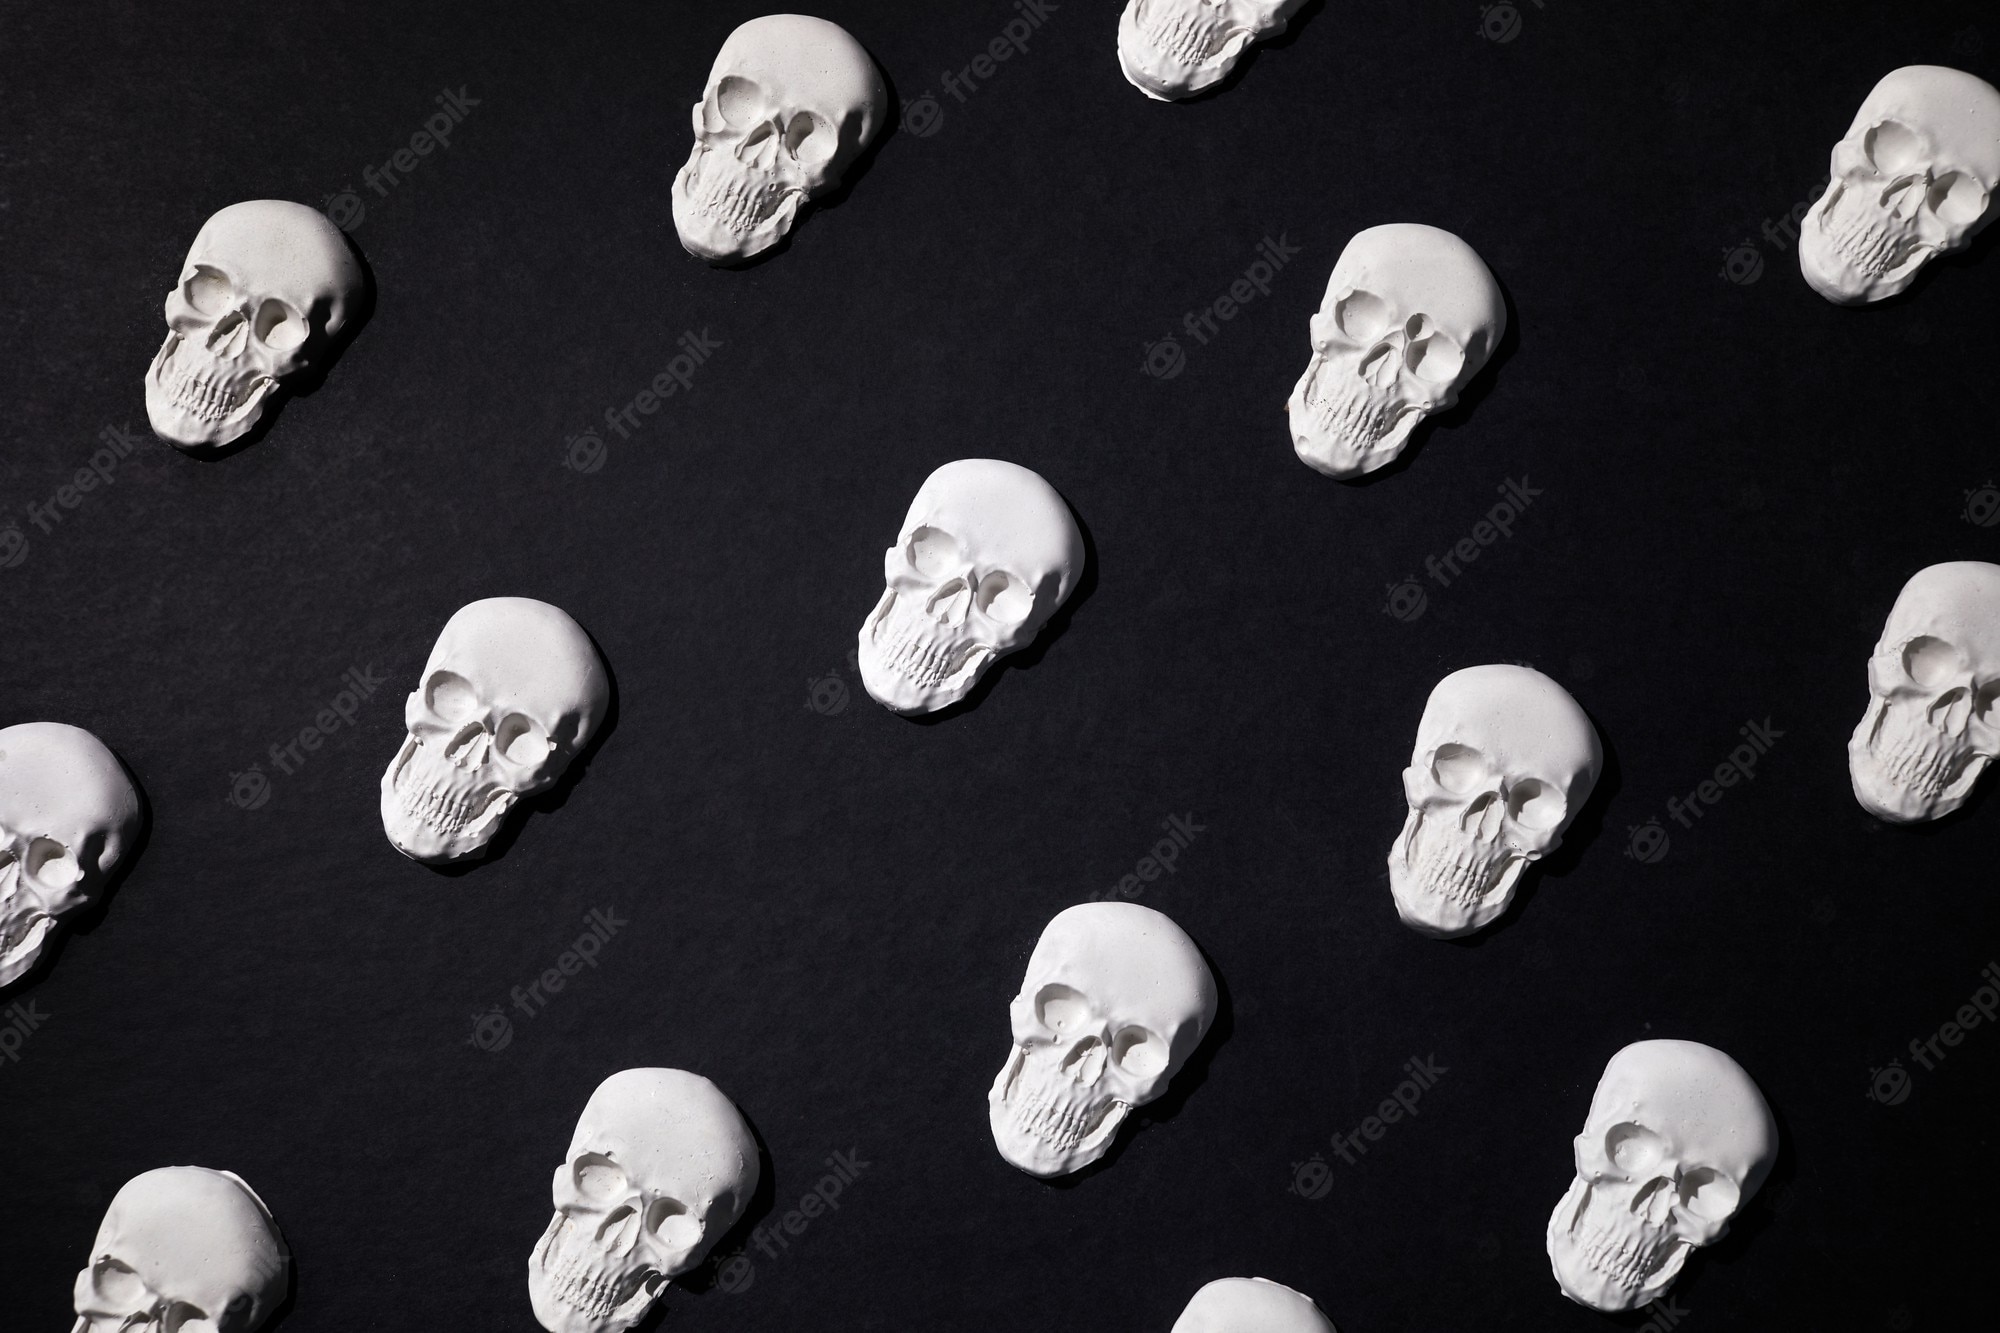 Skeleton Halloween Wallpaper Image. Free Vectors, & PSD